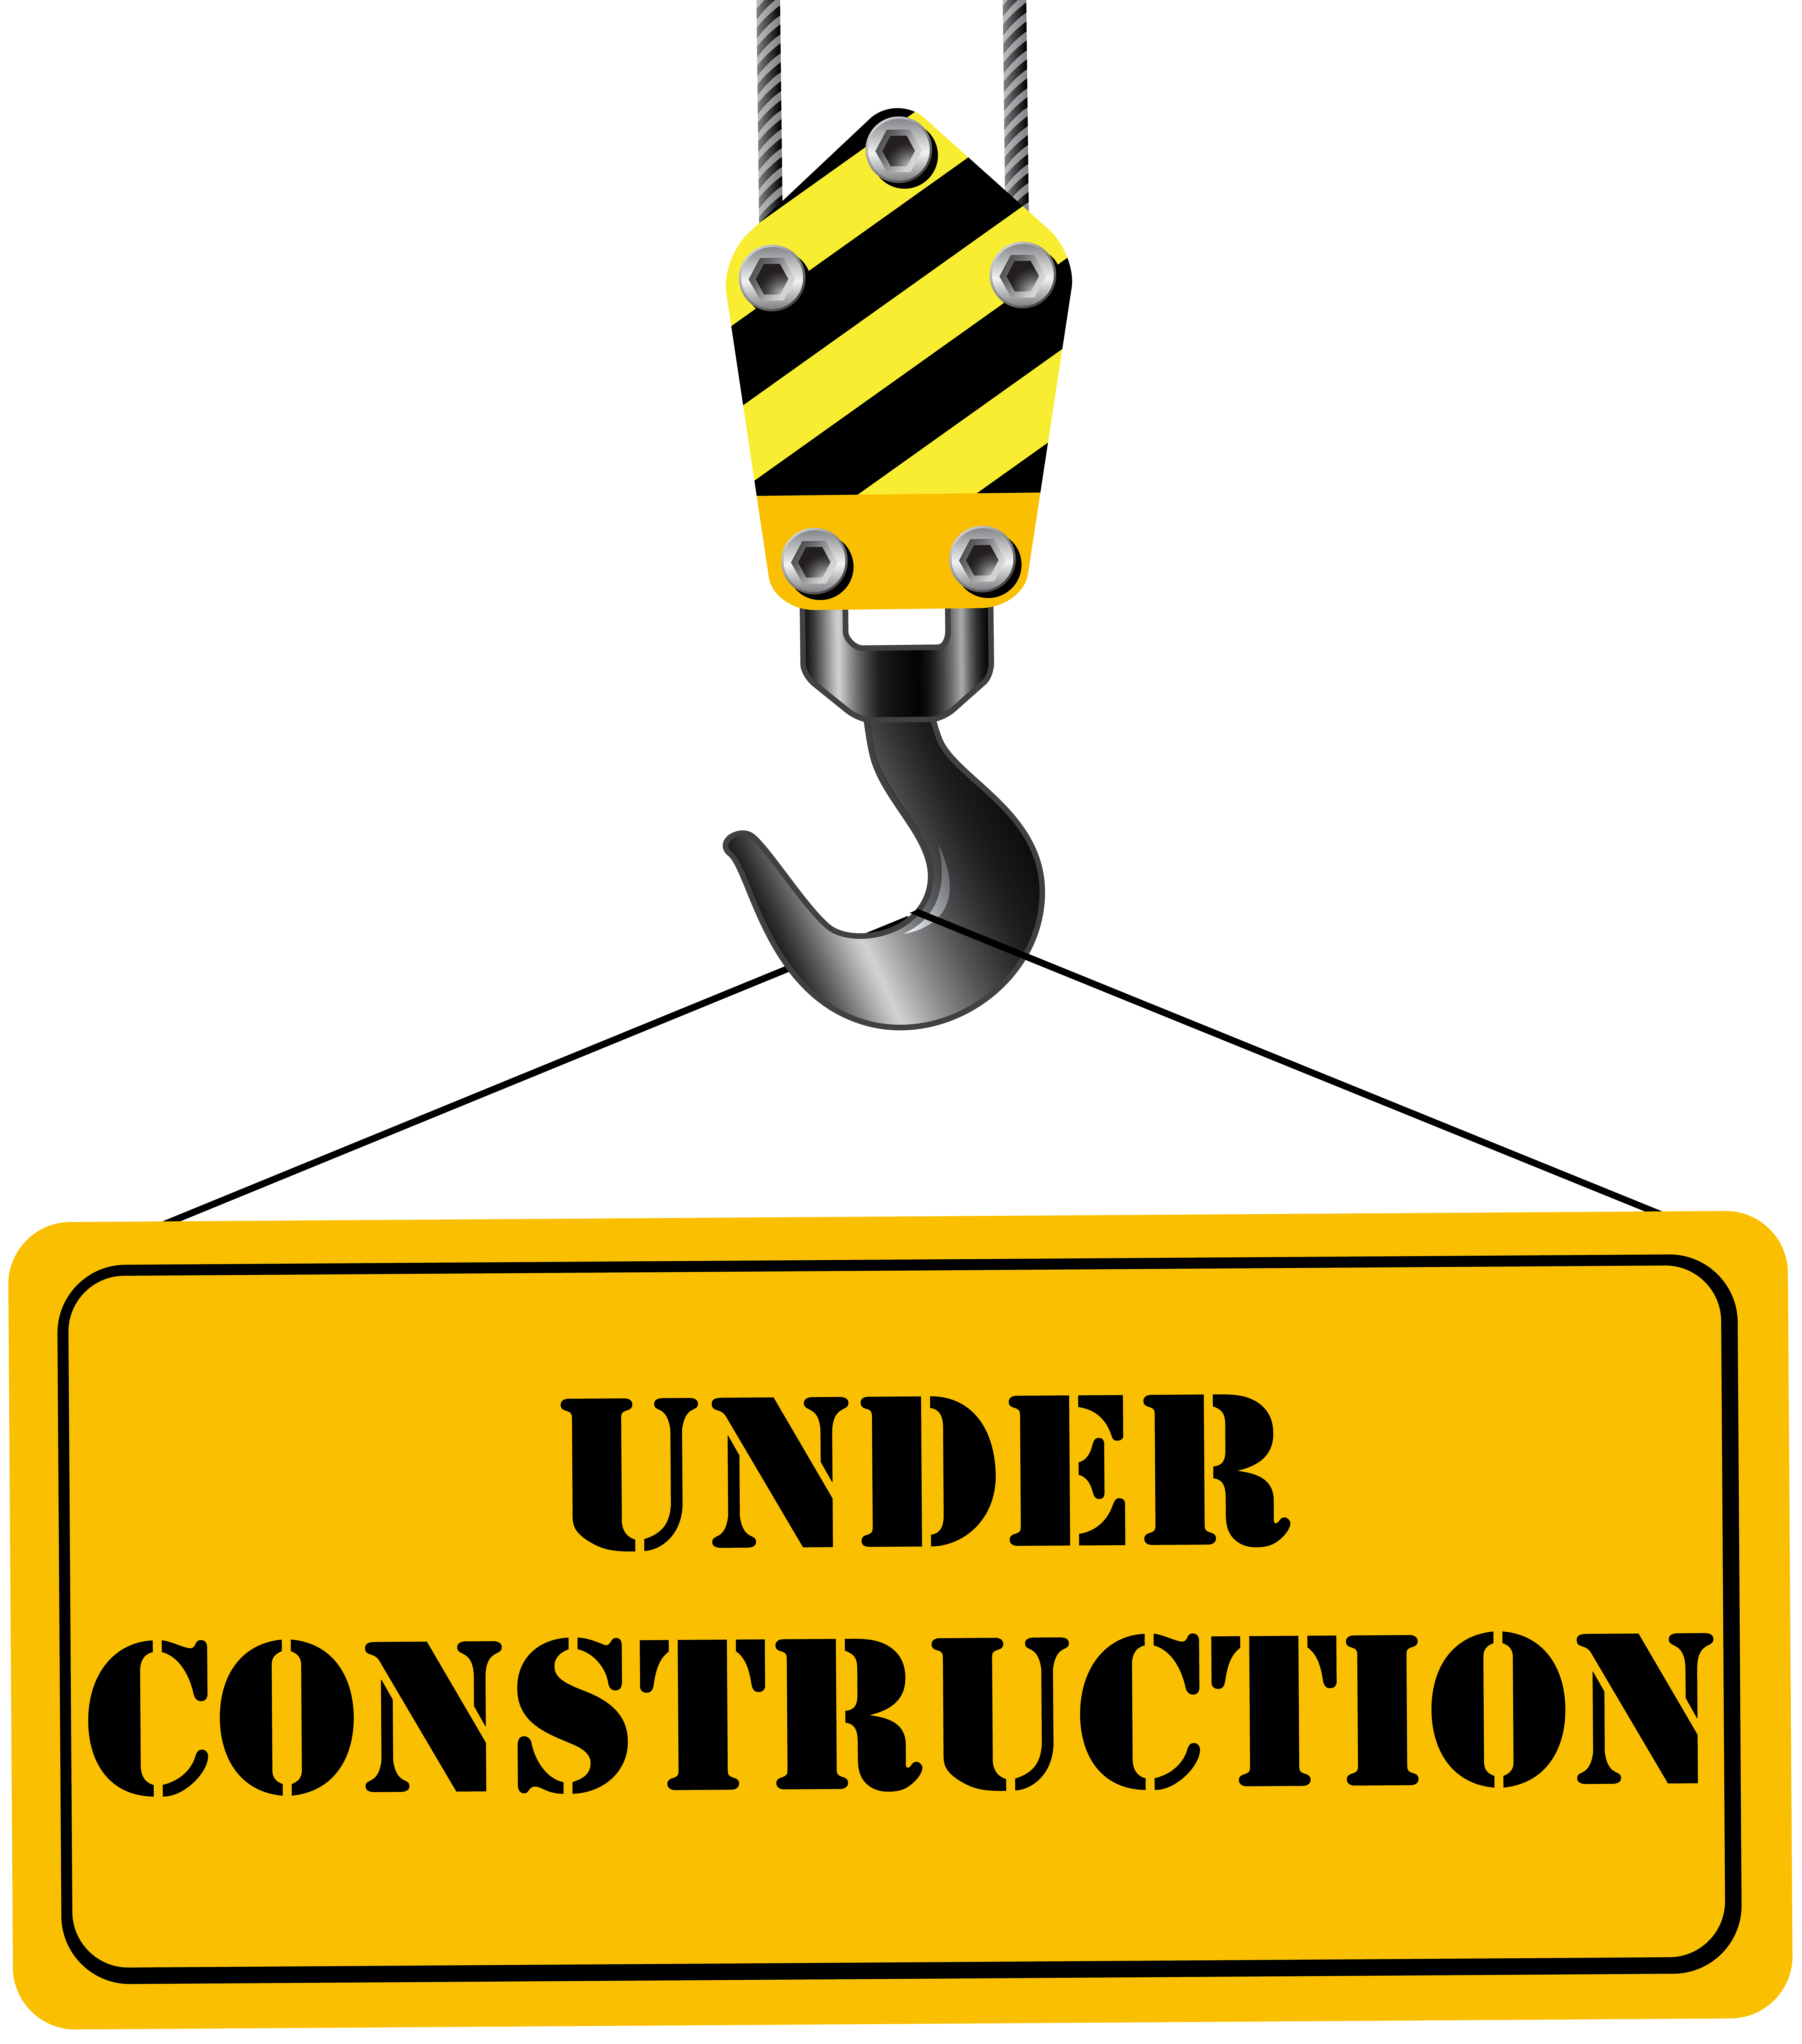 Under Construction PNG Clip Art Image.